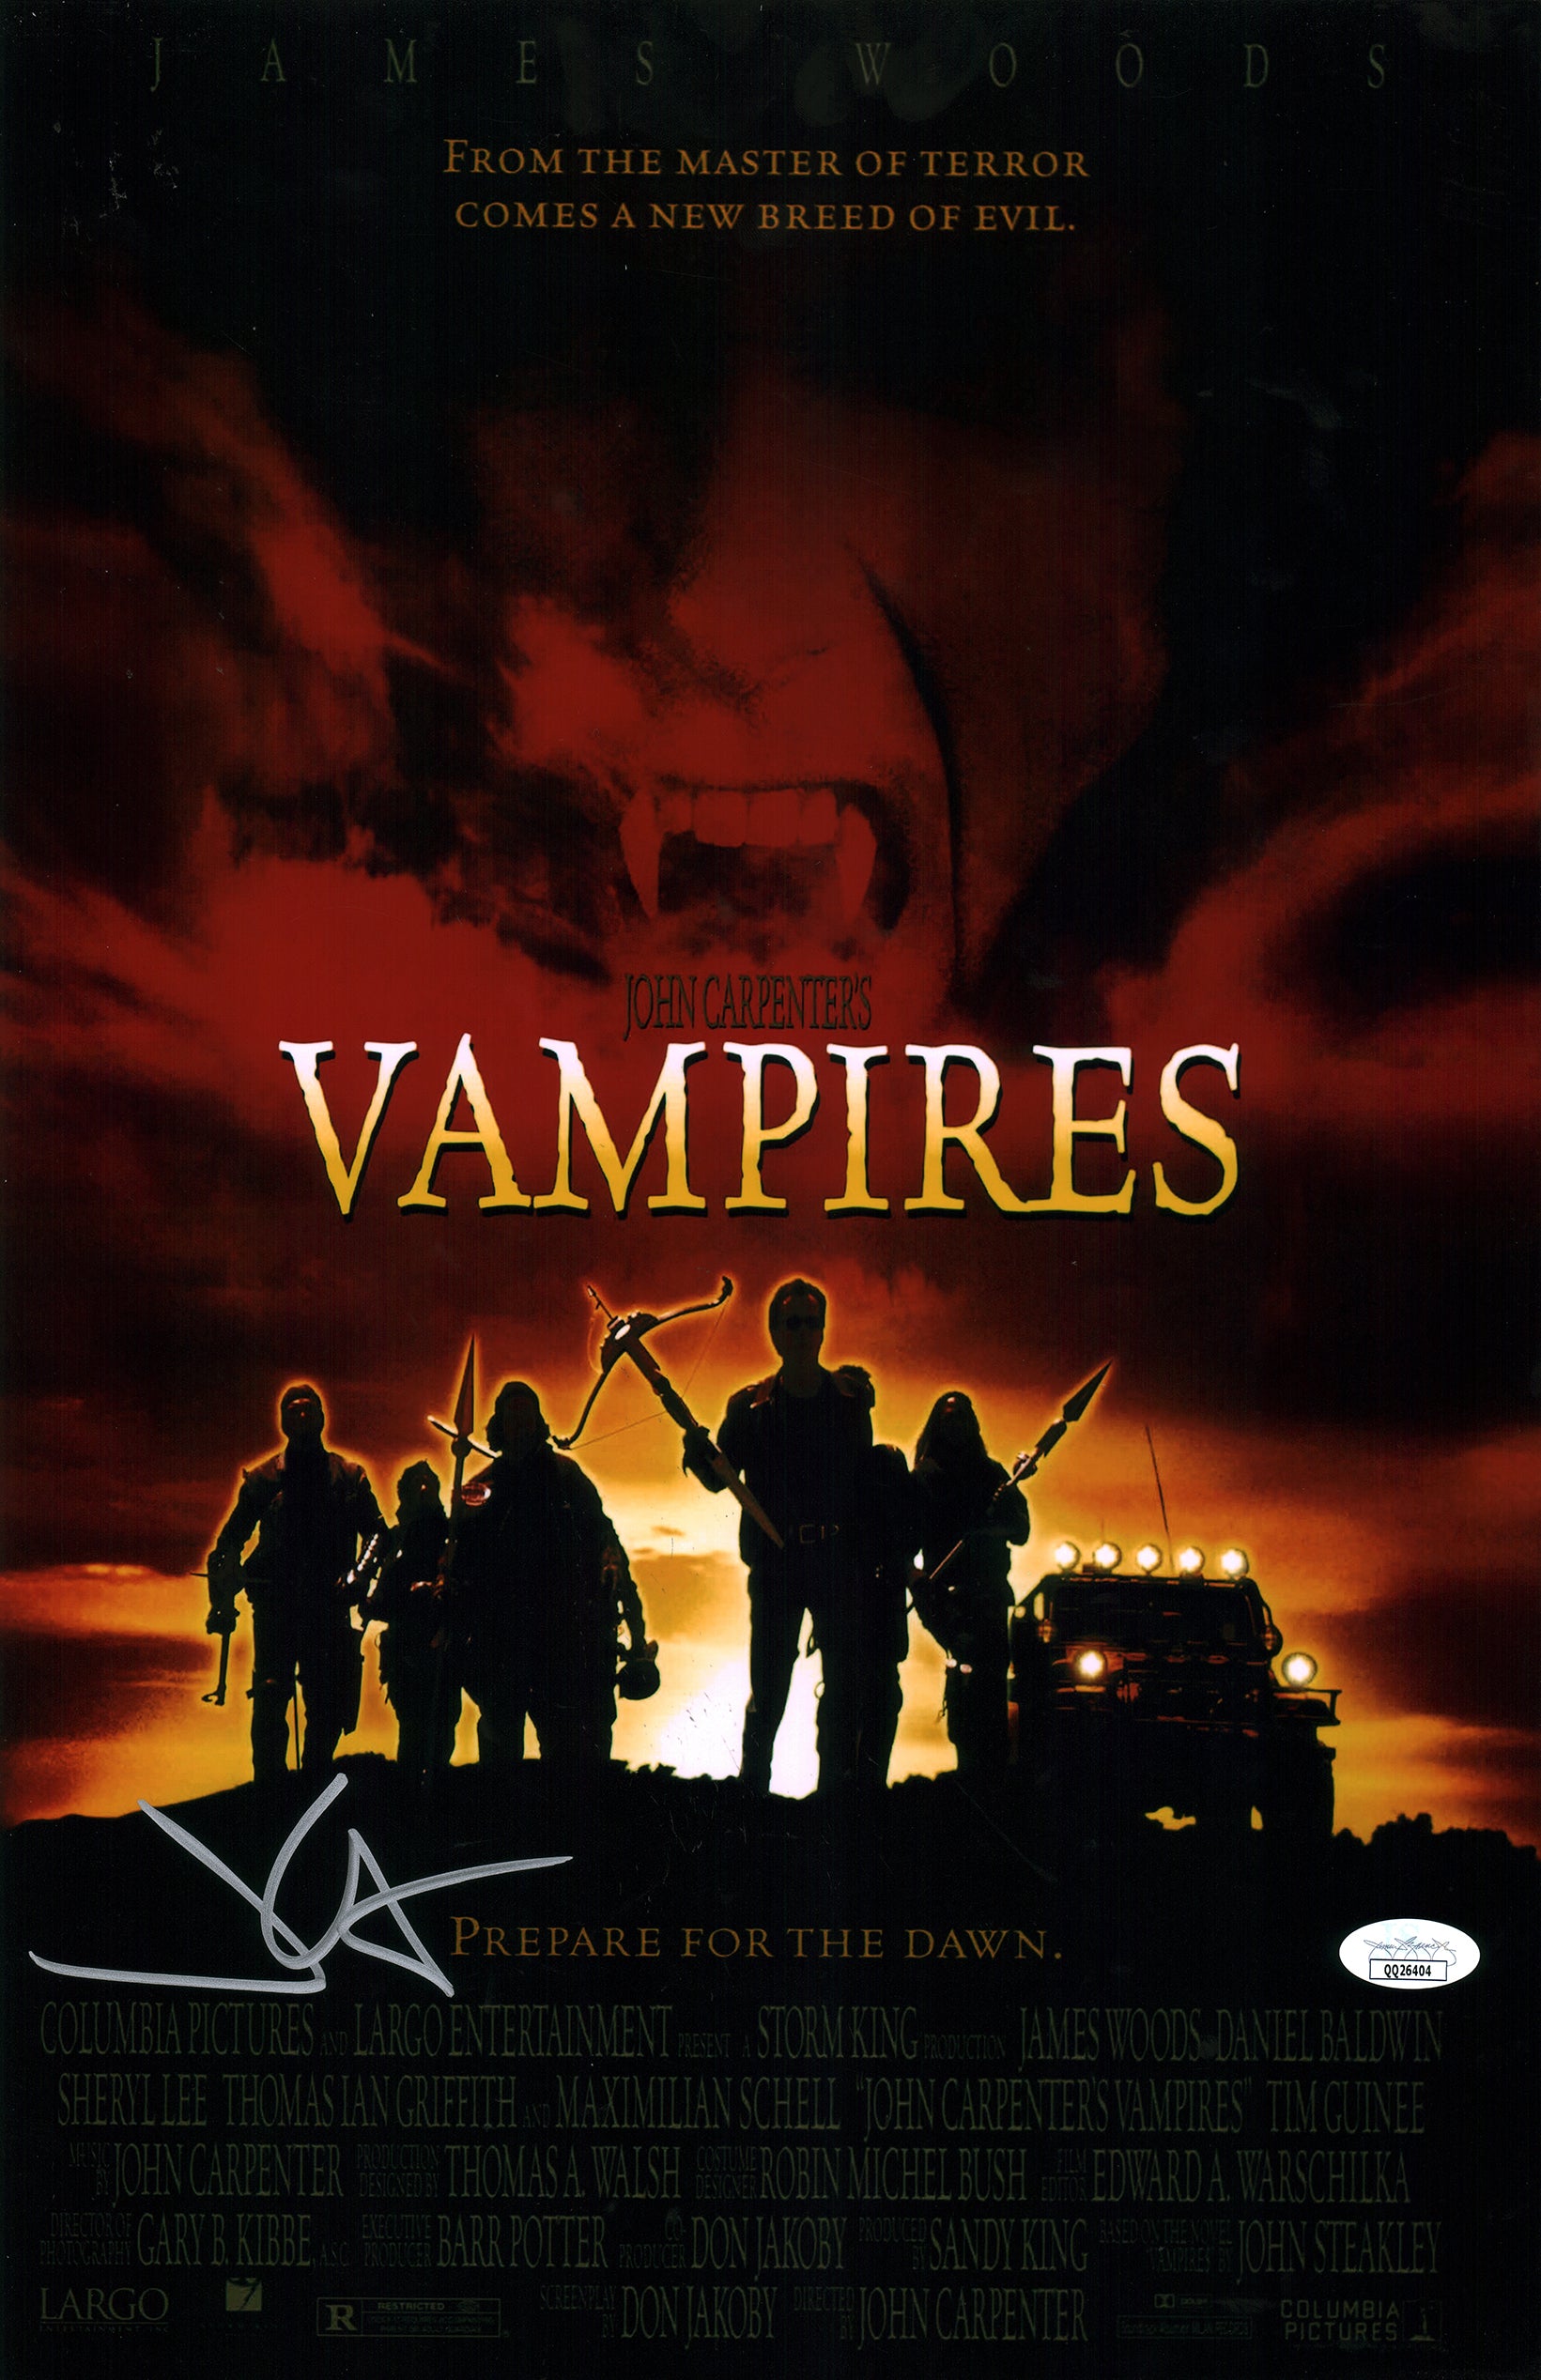 John Carpenter's Vampires 11x17 Photo Poster Signed Autograph JSA Certified COA Auto